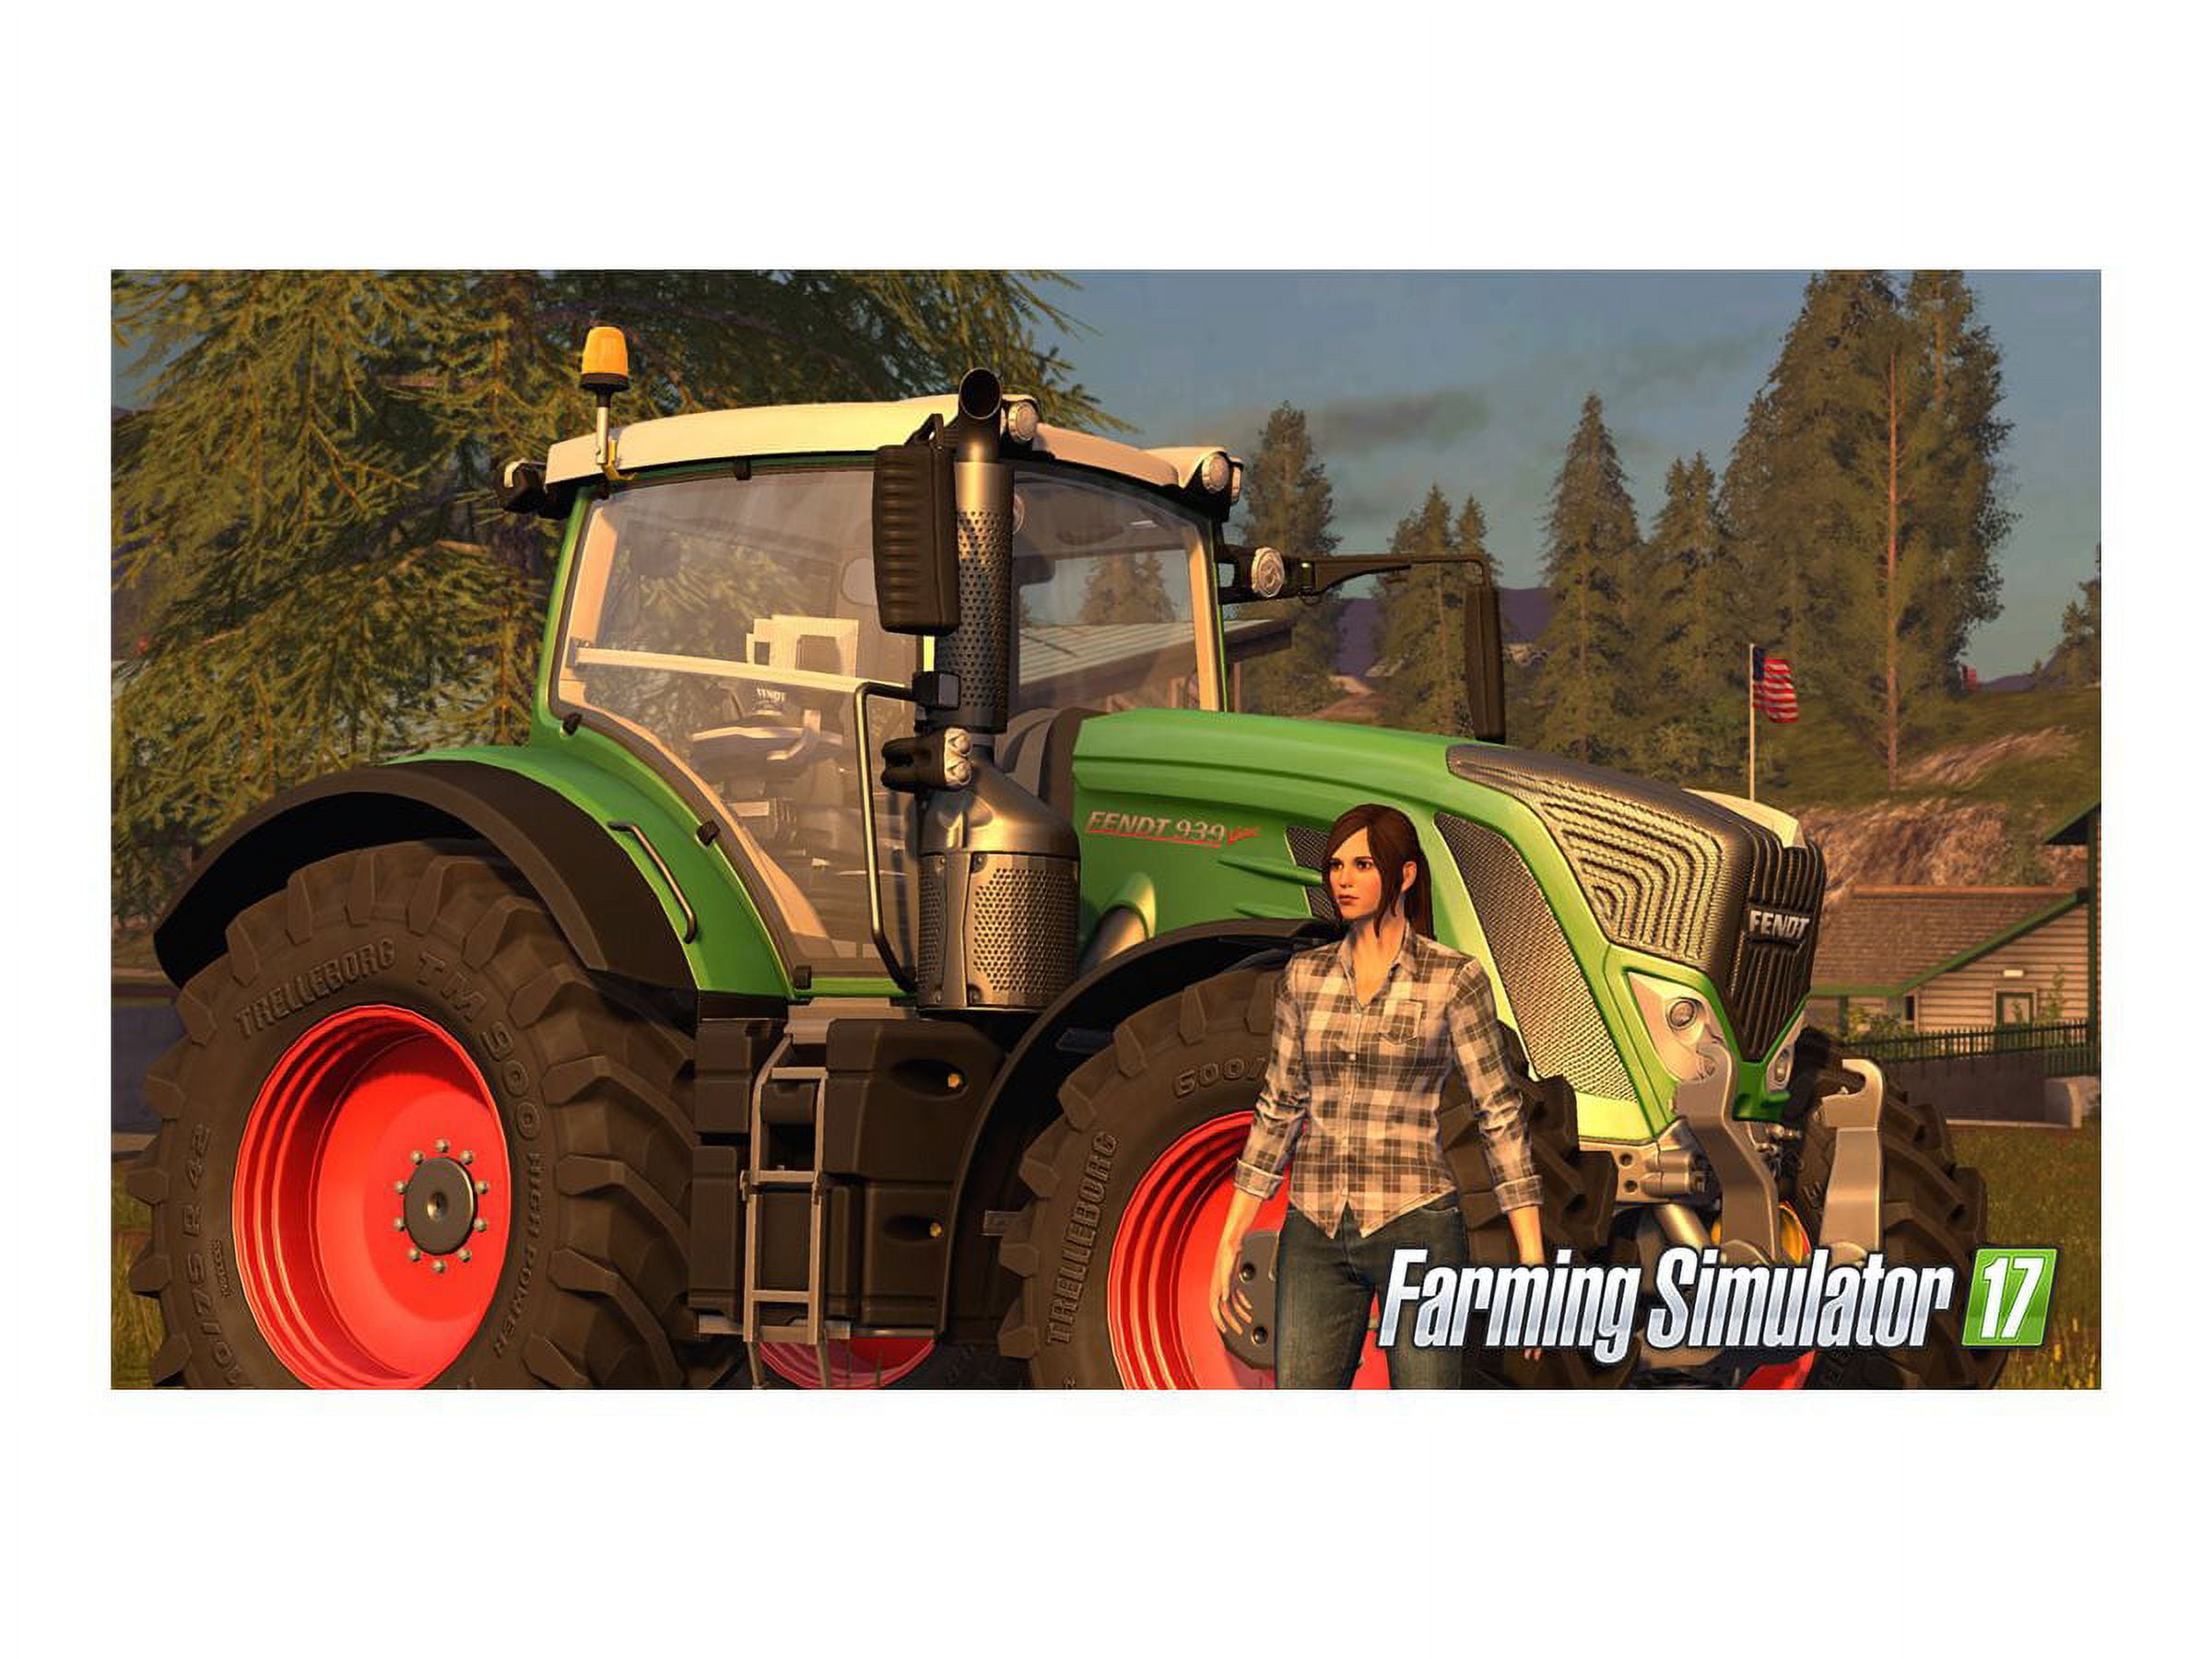 Farming Simulator - Eager for a taste of Farming Simulator 20